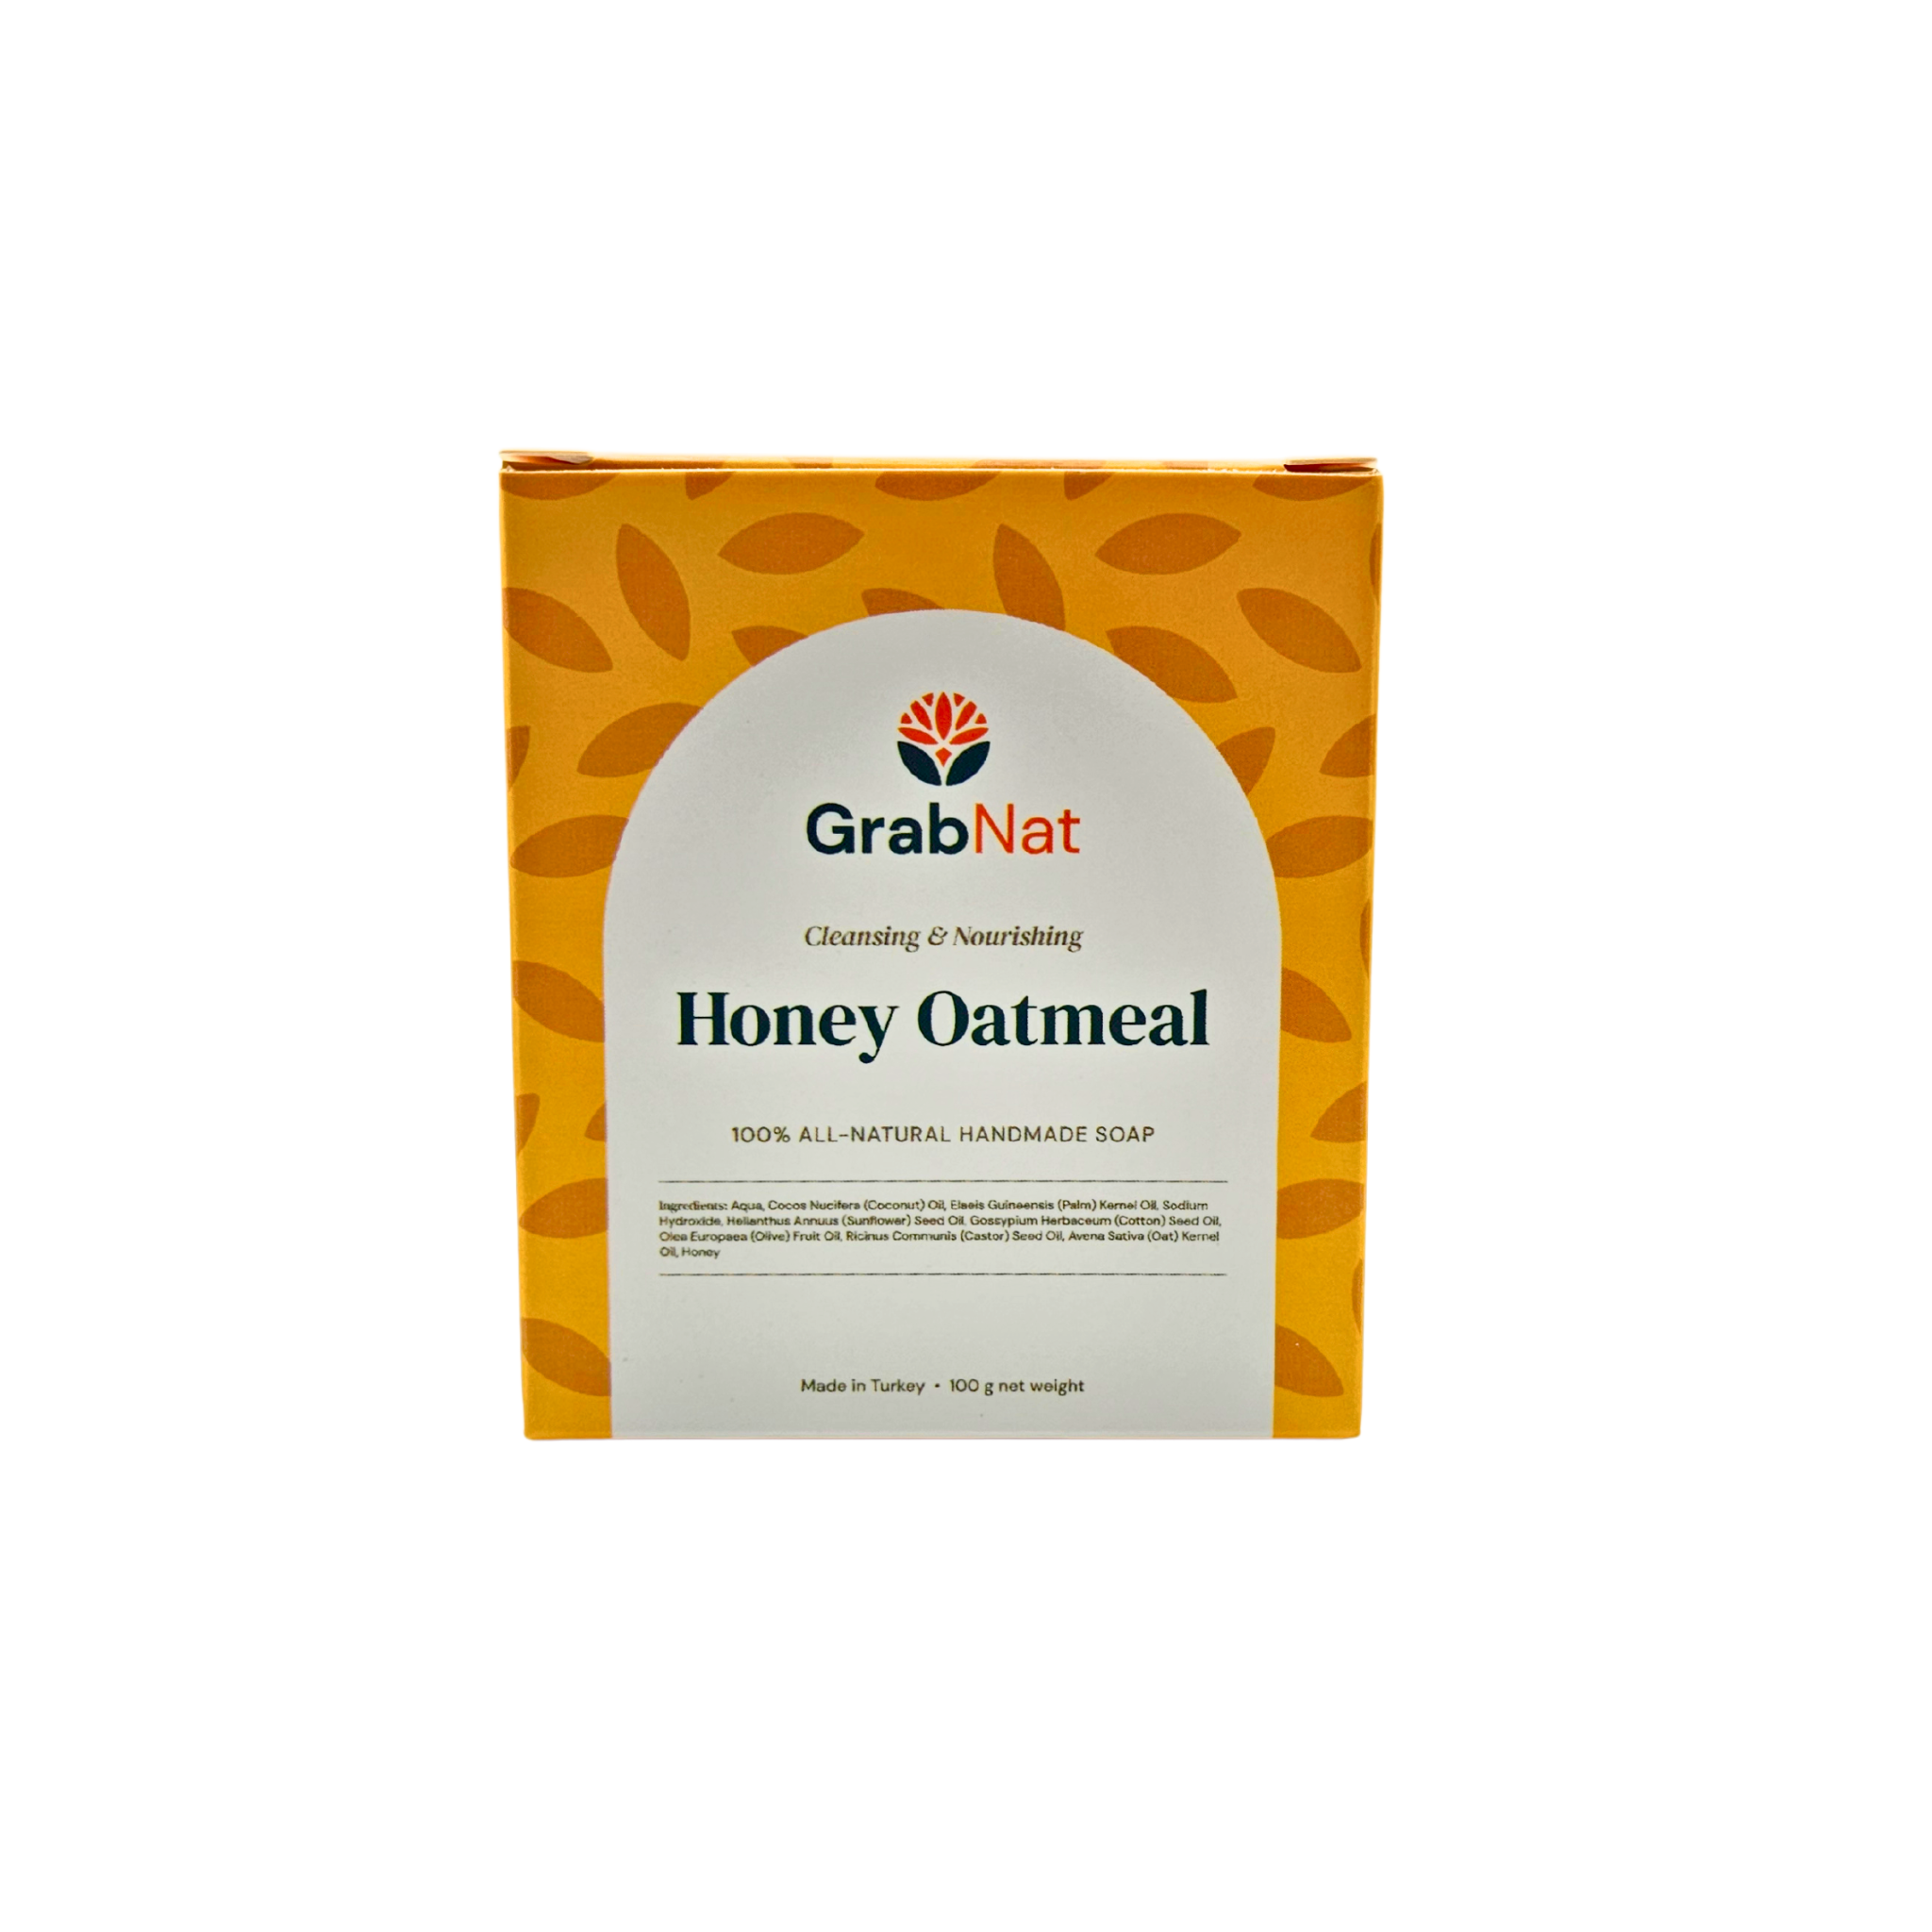 Gentle Essentials Sensitive Dry Skin Variety Pack (5 pack): Chamomile, Lavender, Shea Butter, Aloe Vera, Oatmeal Honey